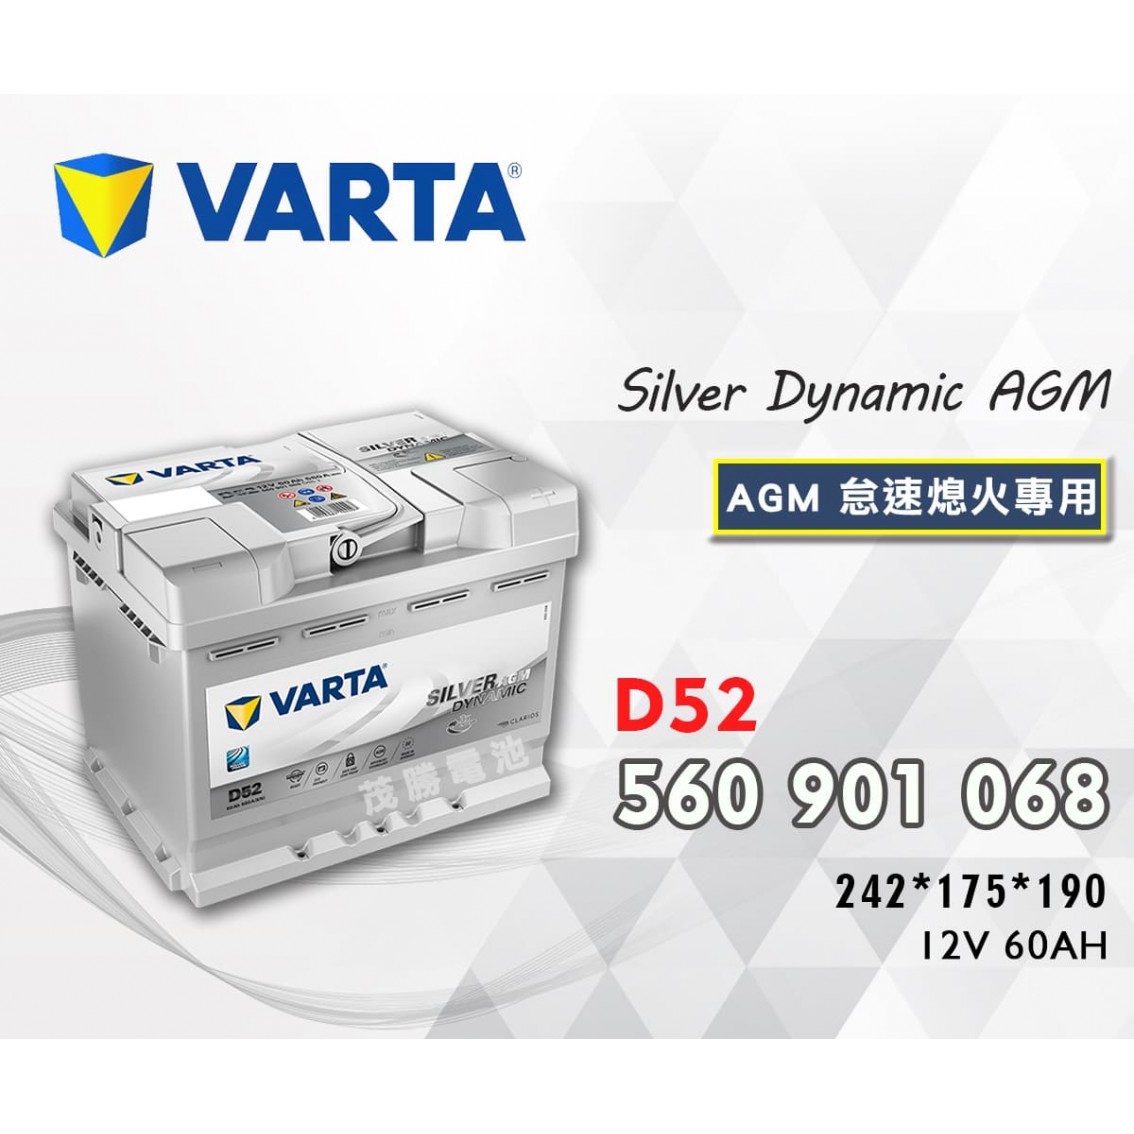 D52-560901068-LN2-AGM